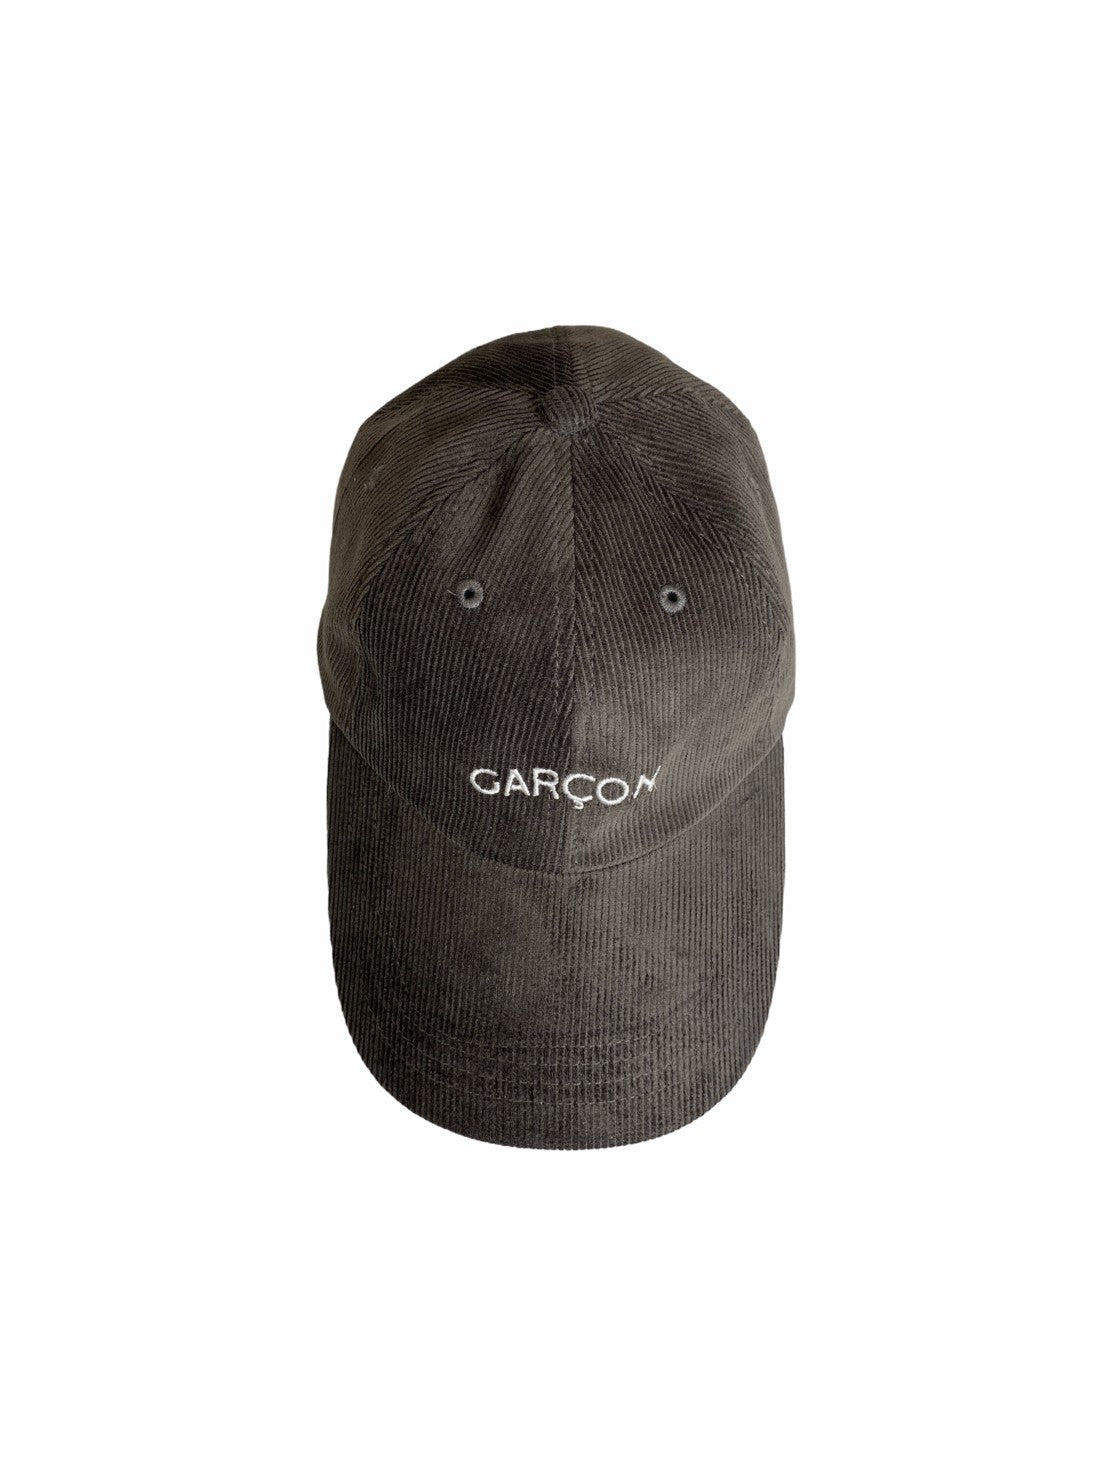 GARCON cap